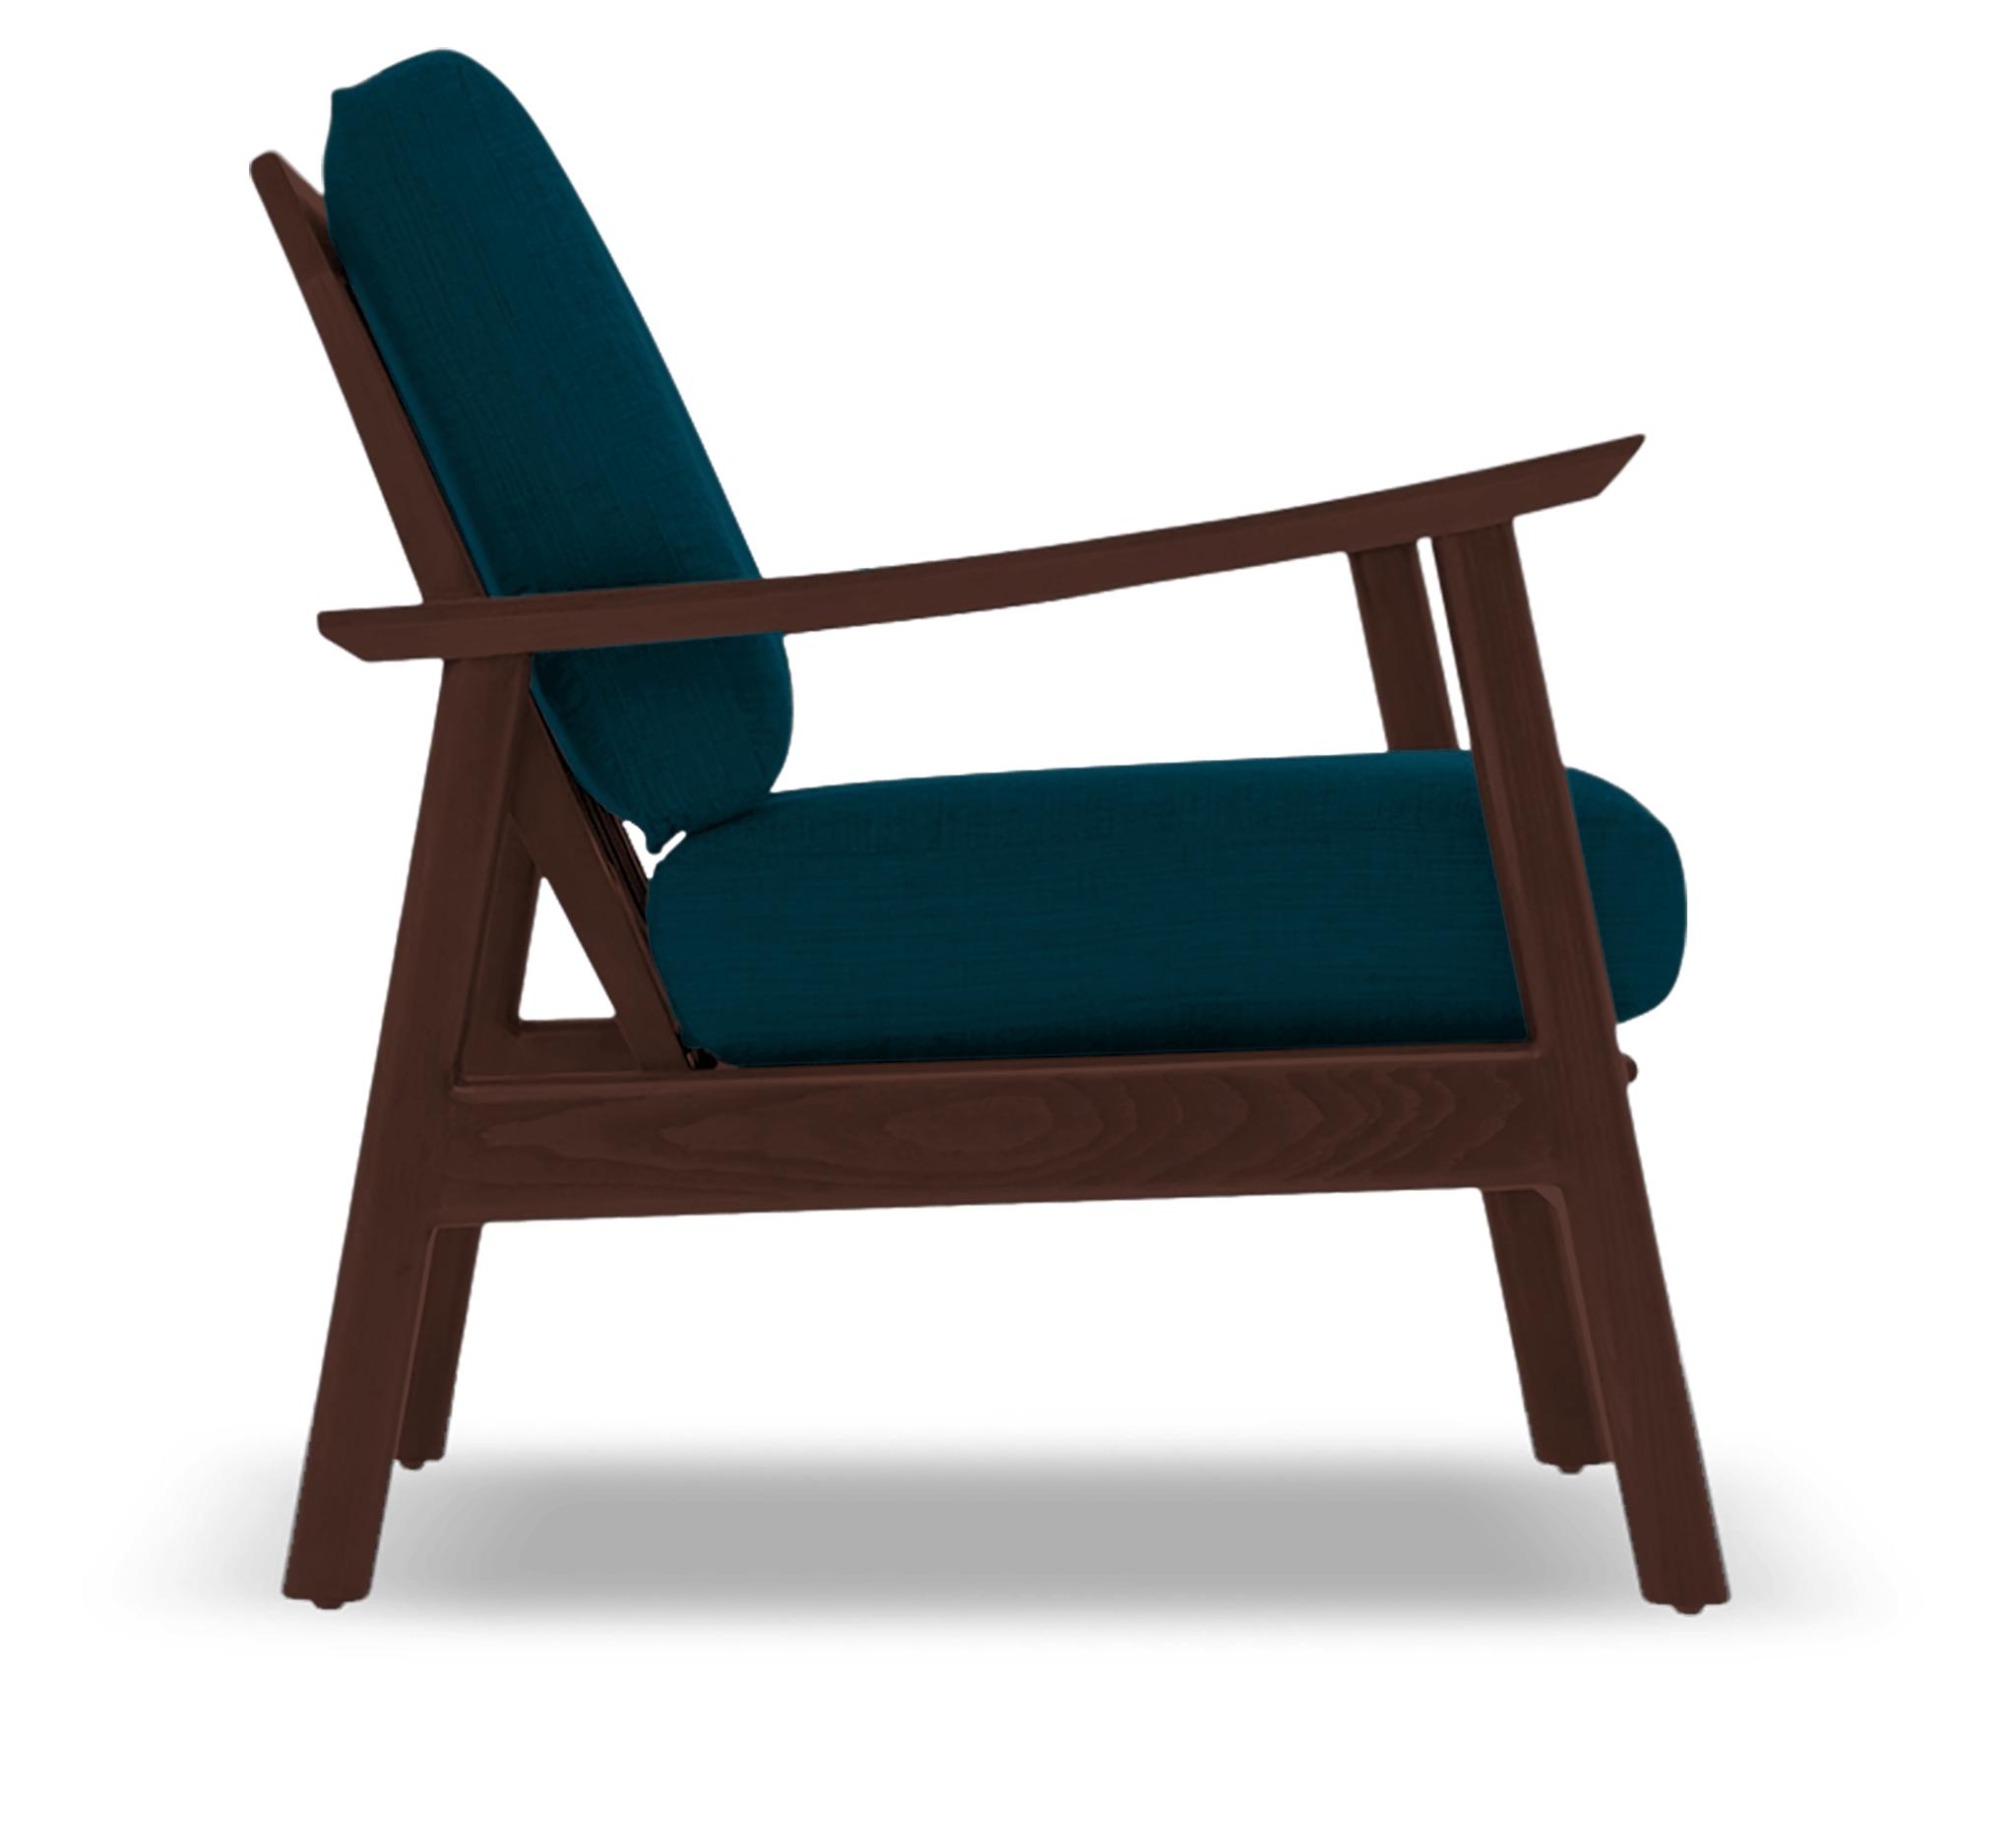 Blue Paley Mid Century Modern Chair - Key Largo Zenith Teal - Walnut - Image 2